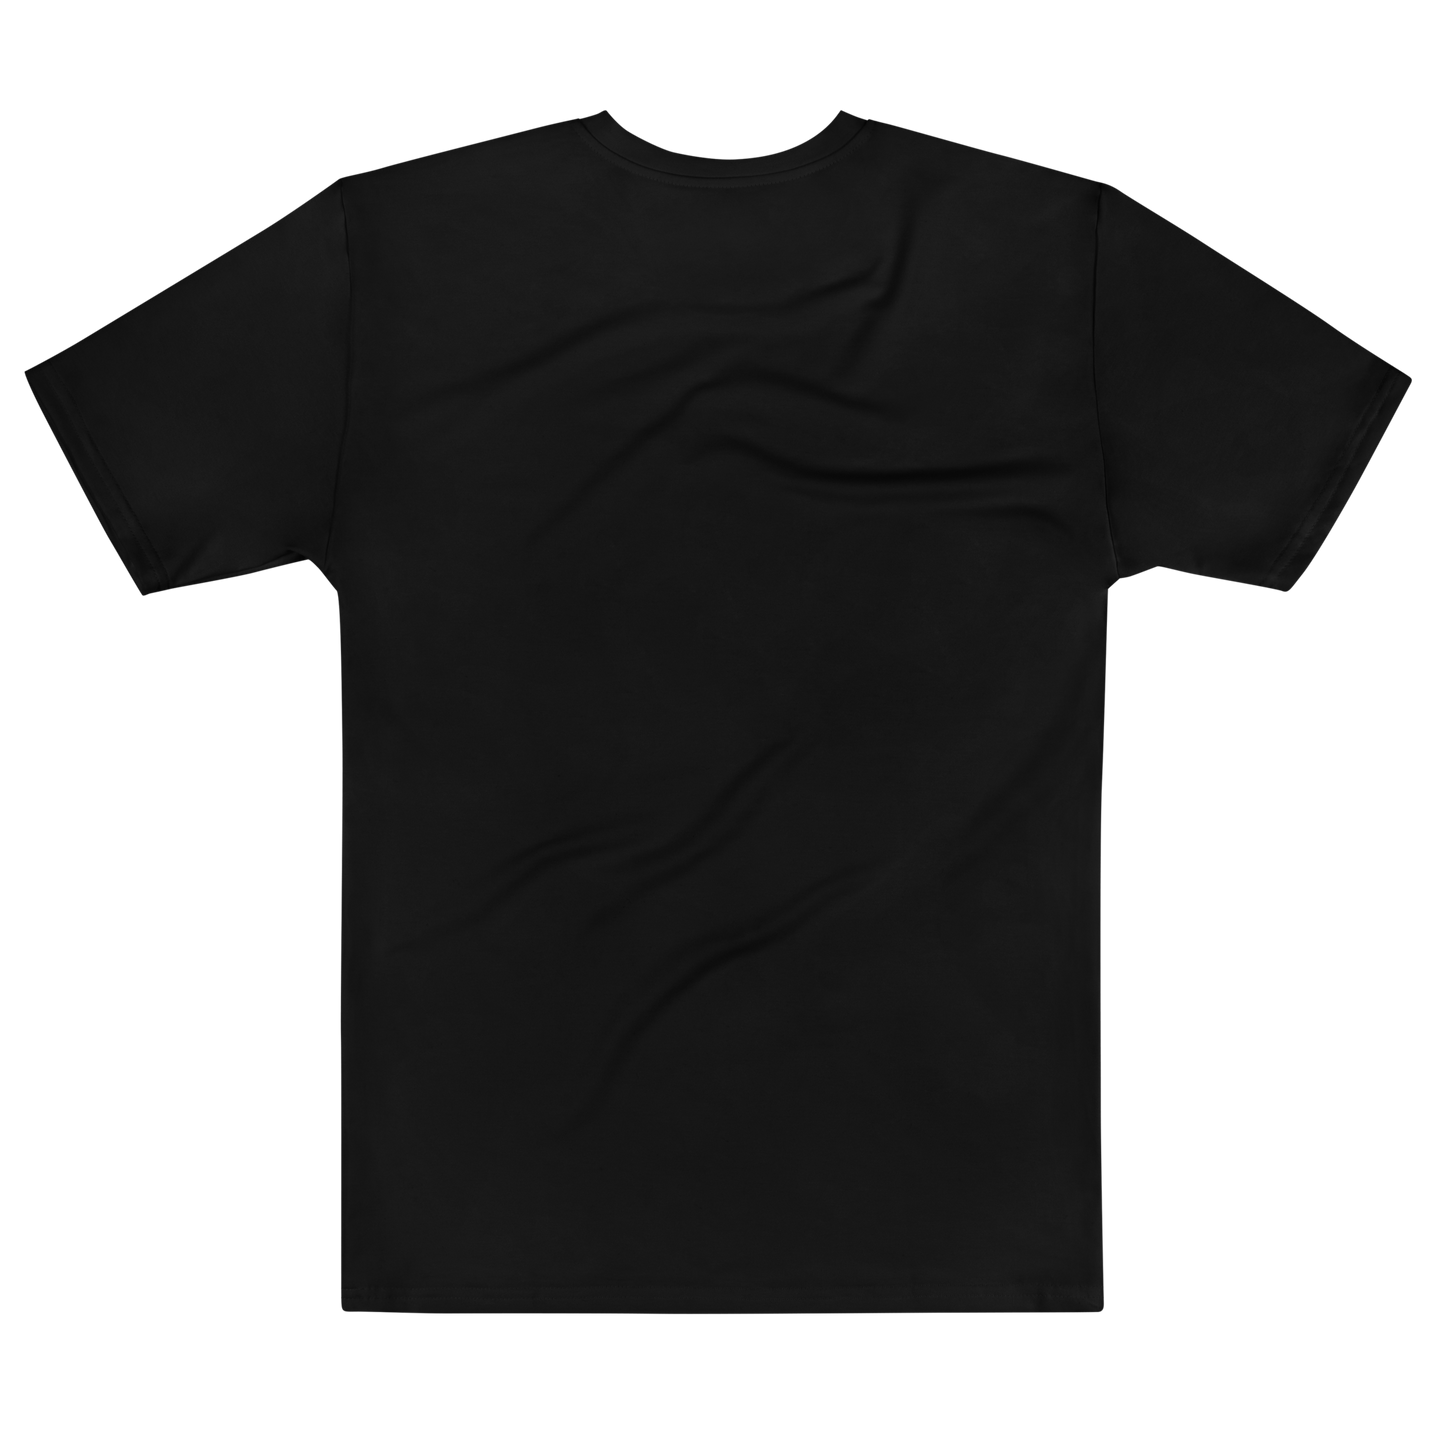 Abysium "Tyrant" - Men's t-shirt